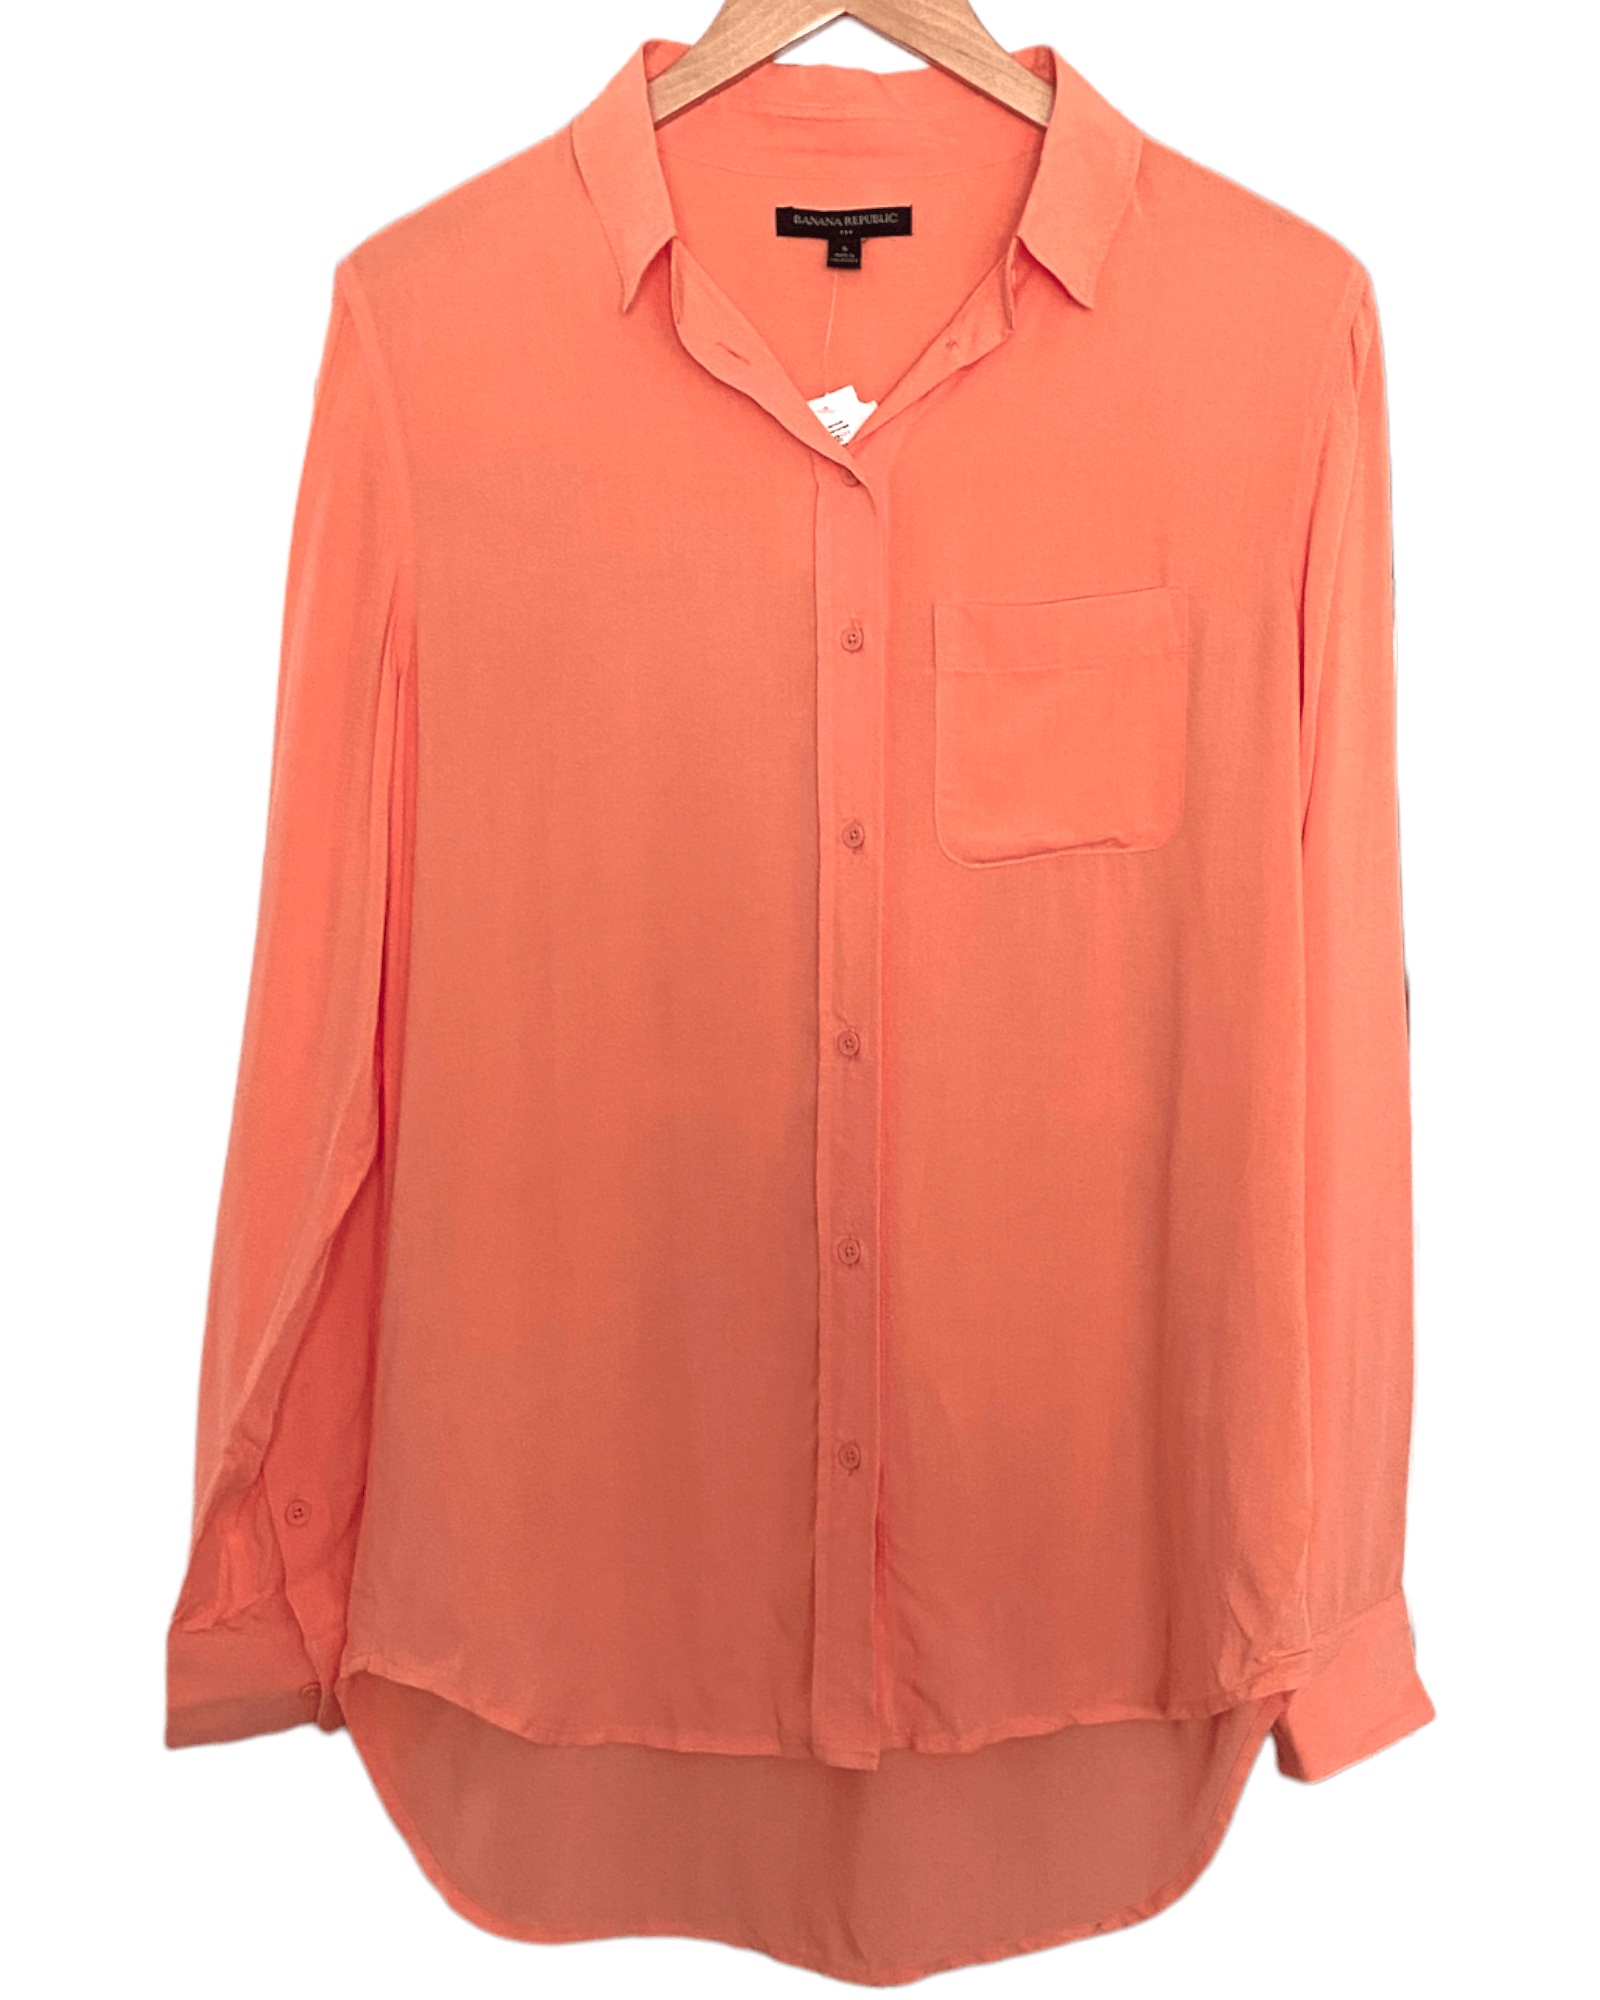 Light Spring BANANA REPUBLIC sherbet orange shirt